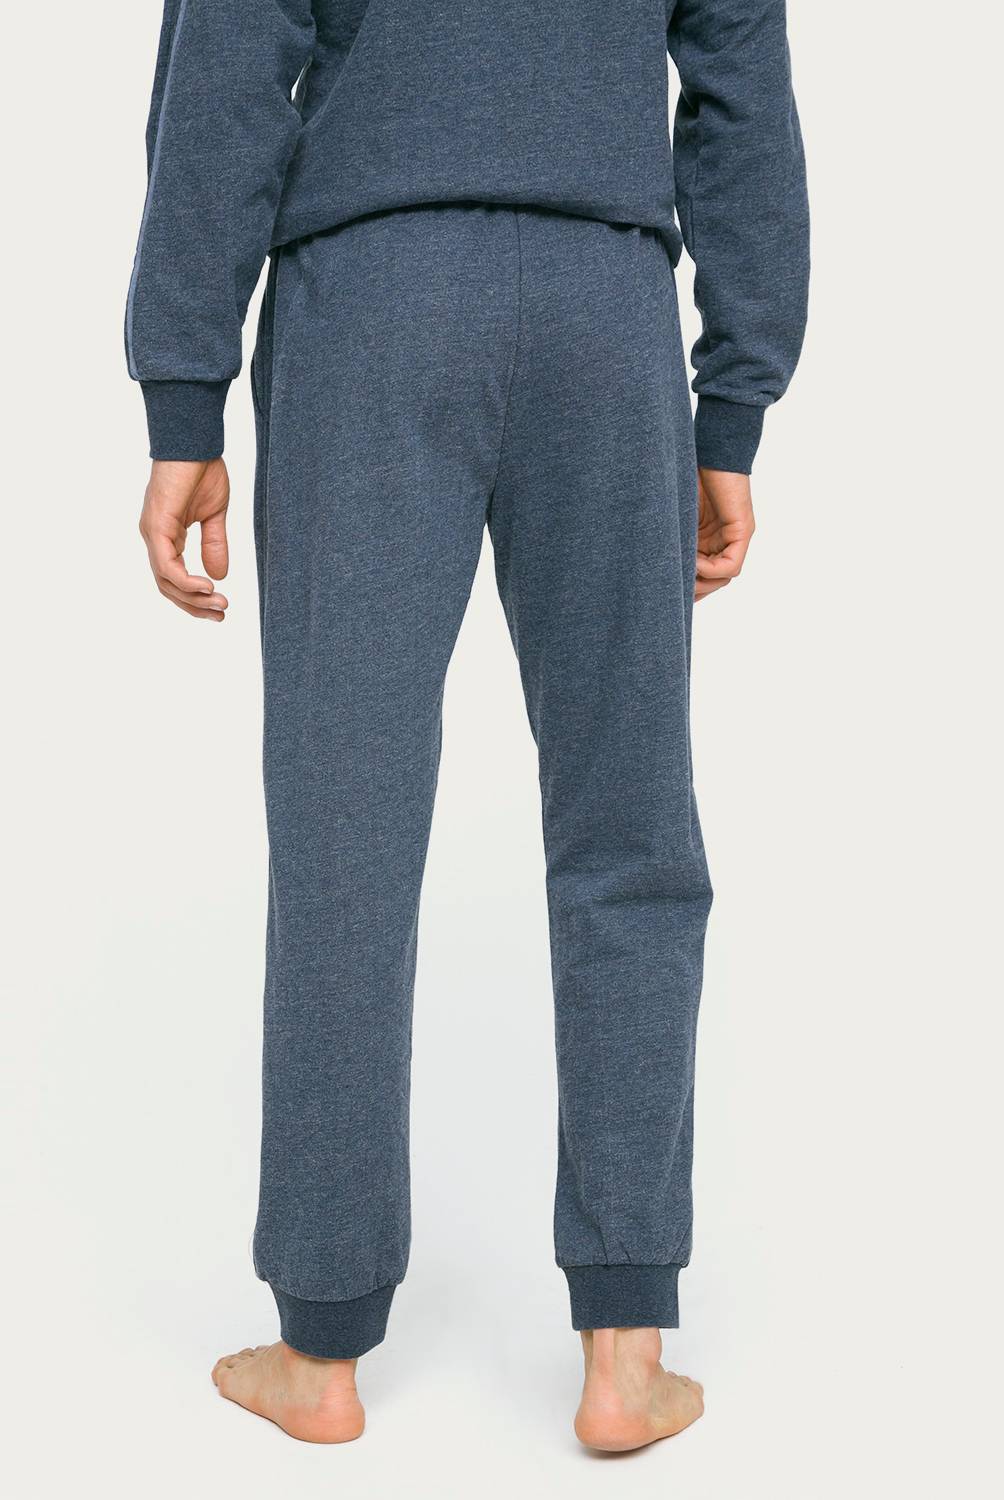 BASEMENT - Pantalon Pijama Hombre